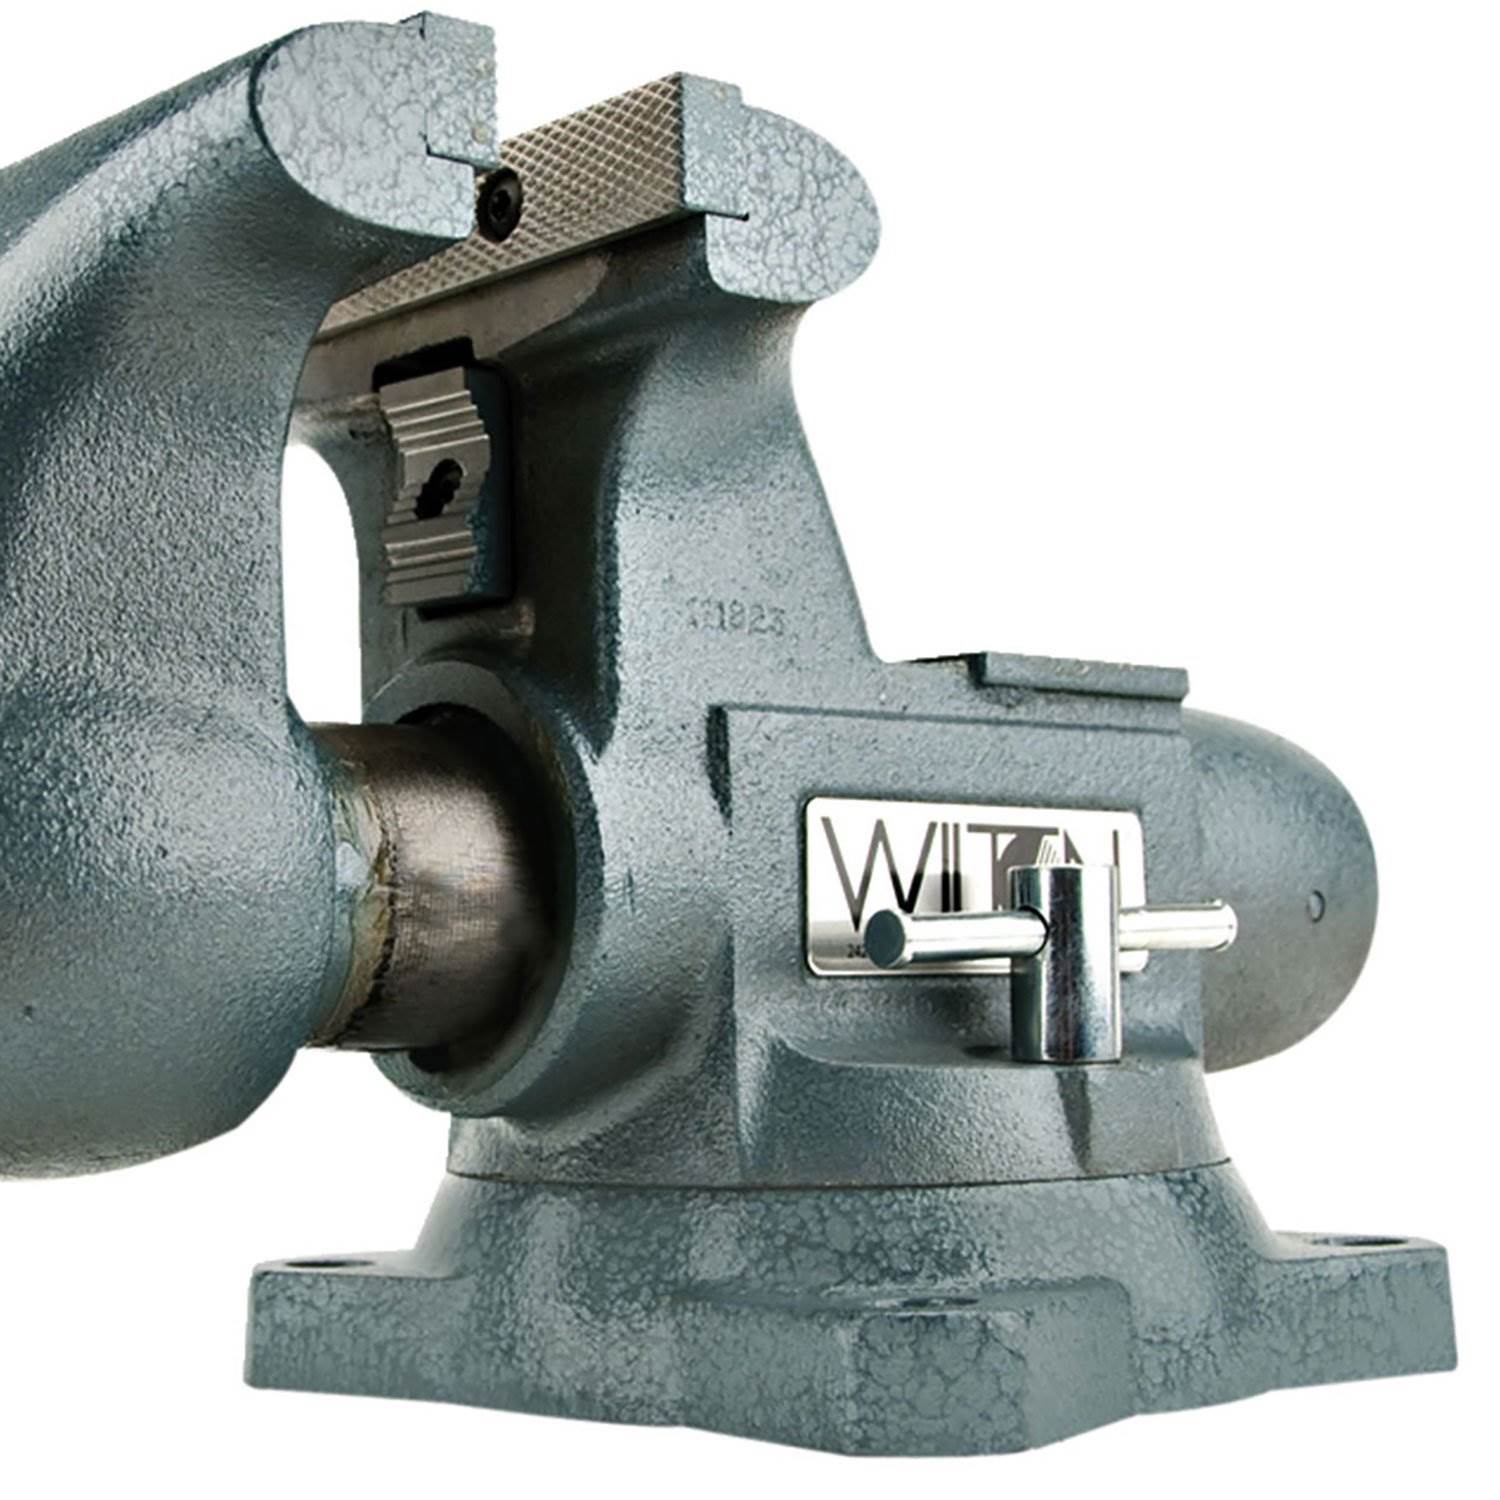 Wilton 63201 6.5 Inch Jaw Tradesman Steel Swivel Base Anvil Work Bench Vise - image 3 of 5